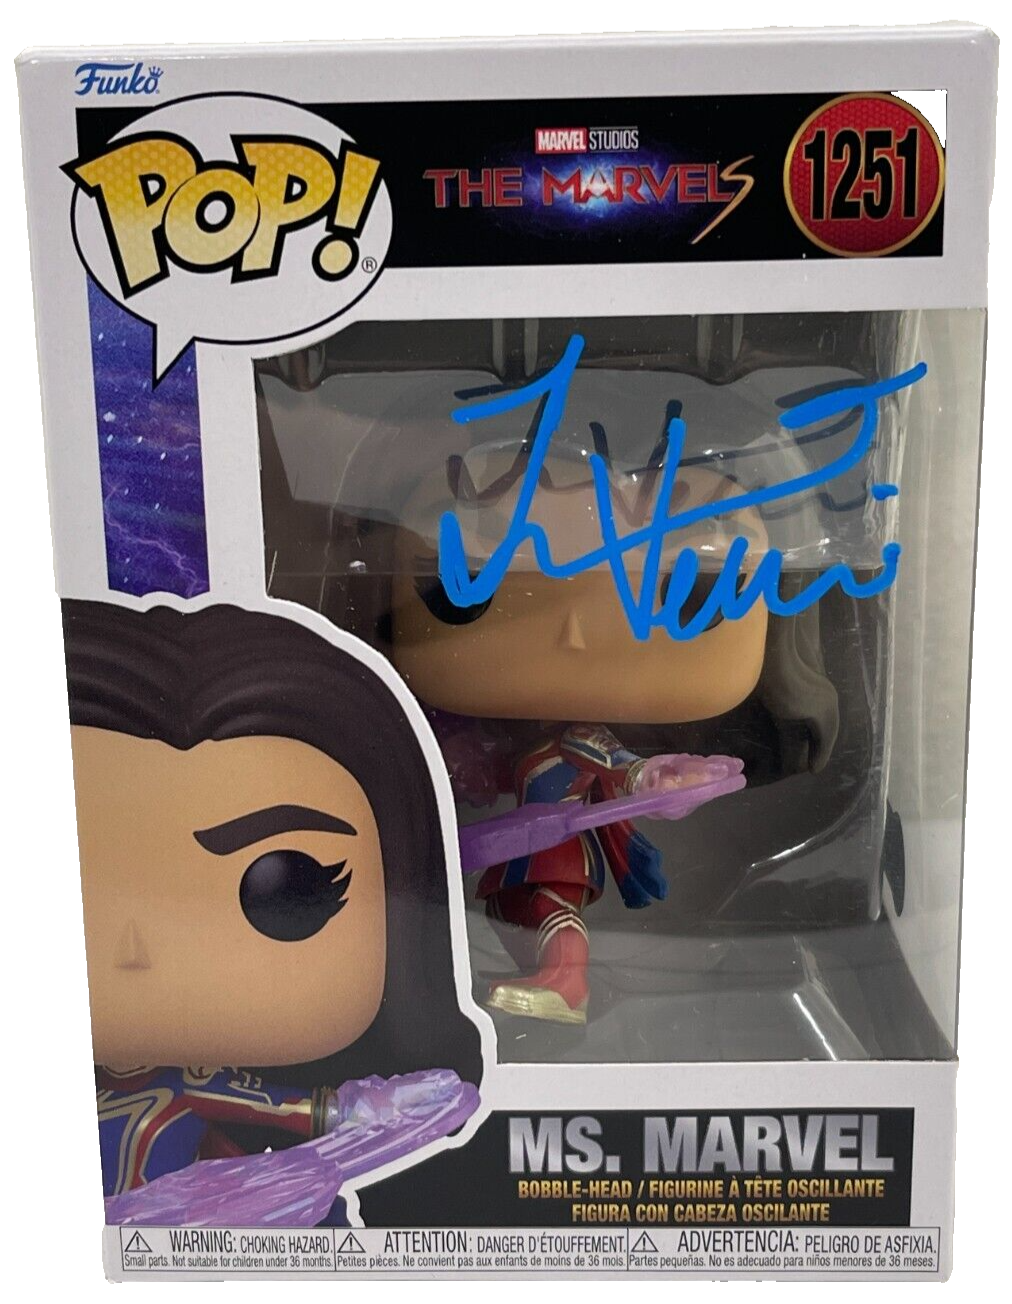 Iman Vellani Authentic Autographed Ms. Marvel The Marvels 1251 Funko Pop Figure